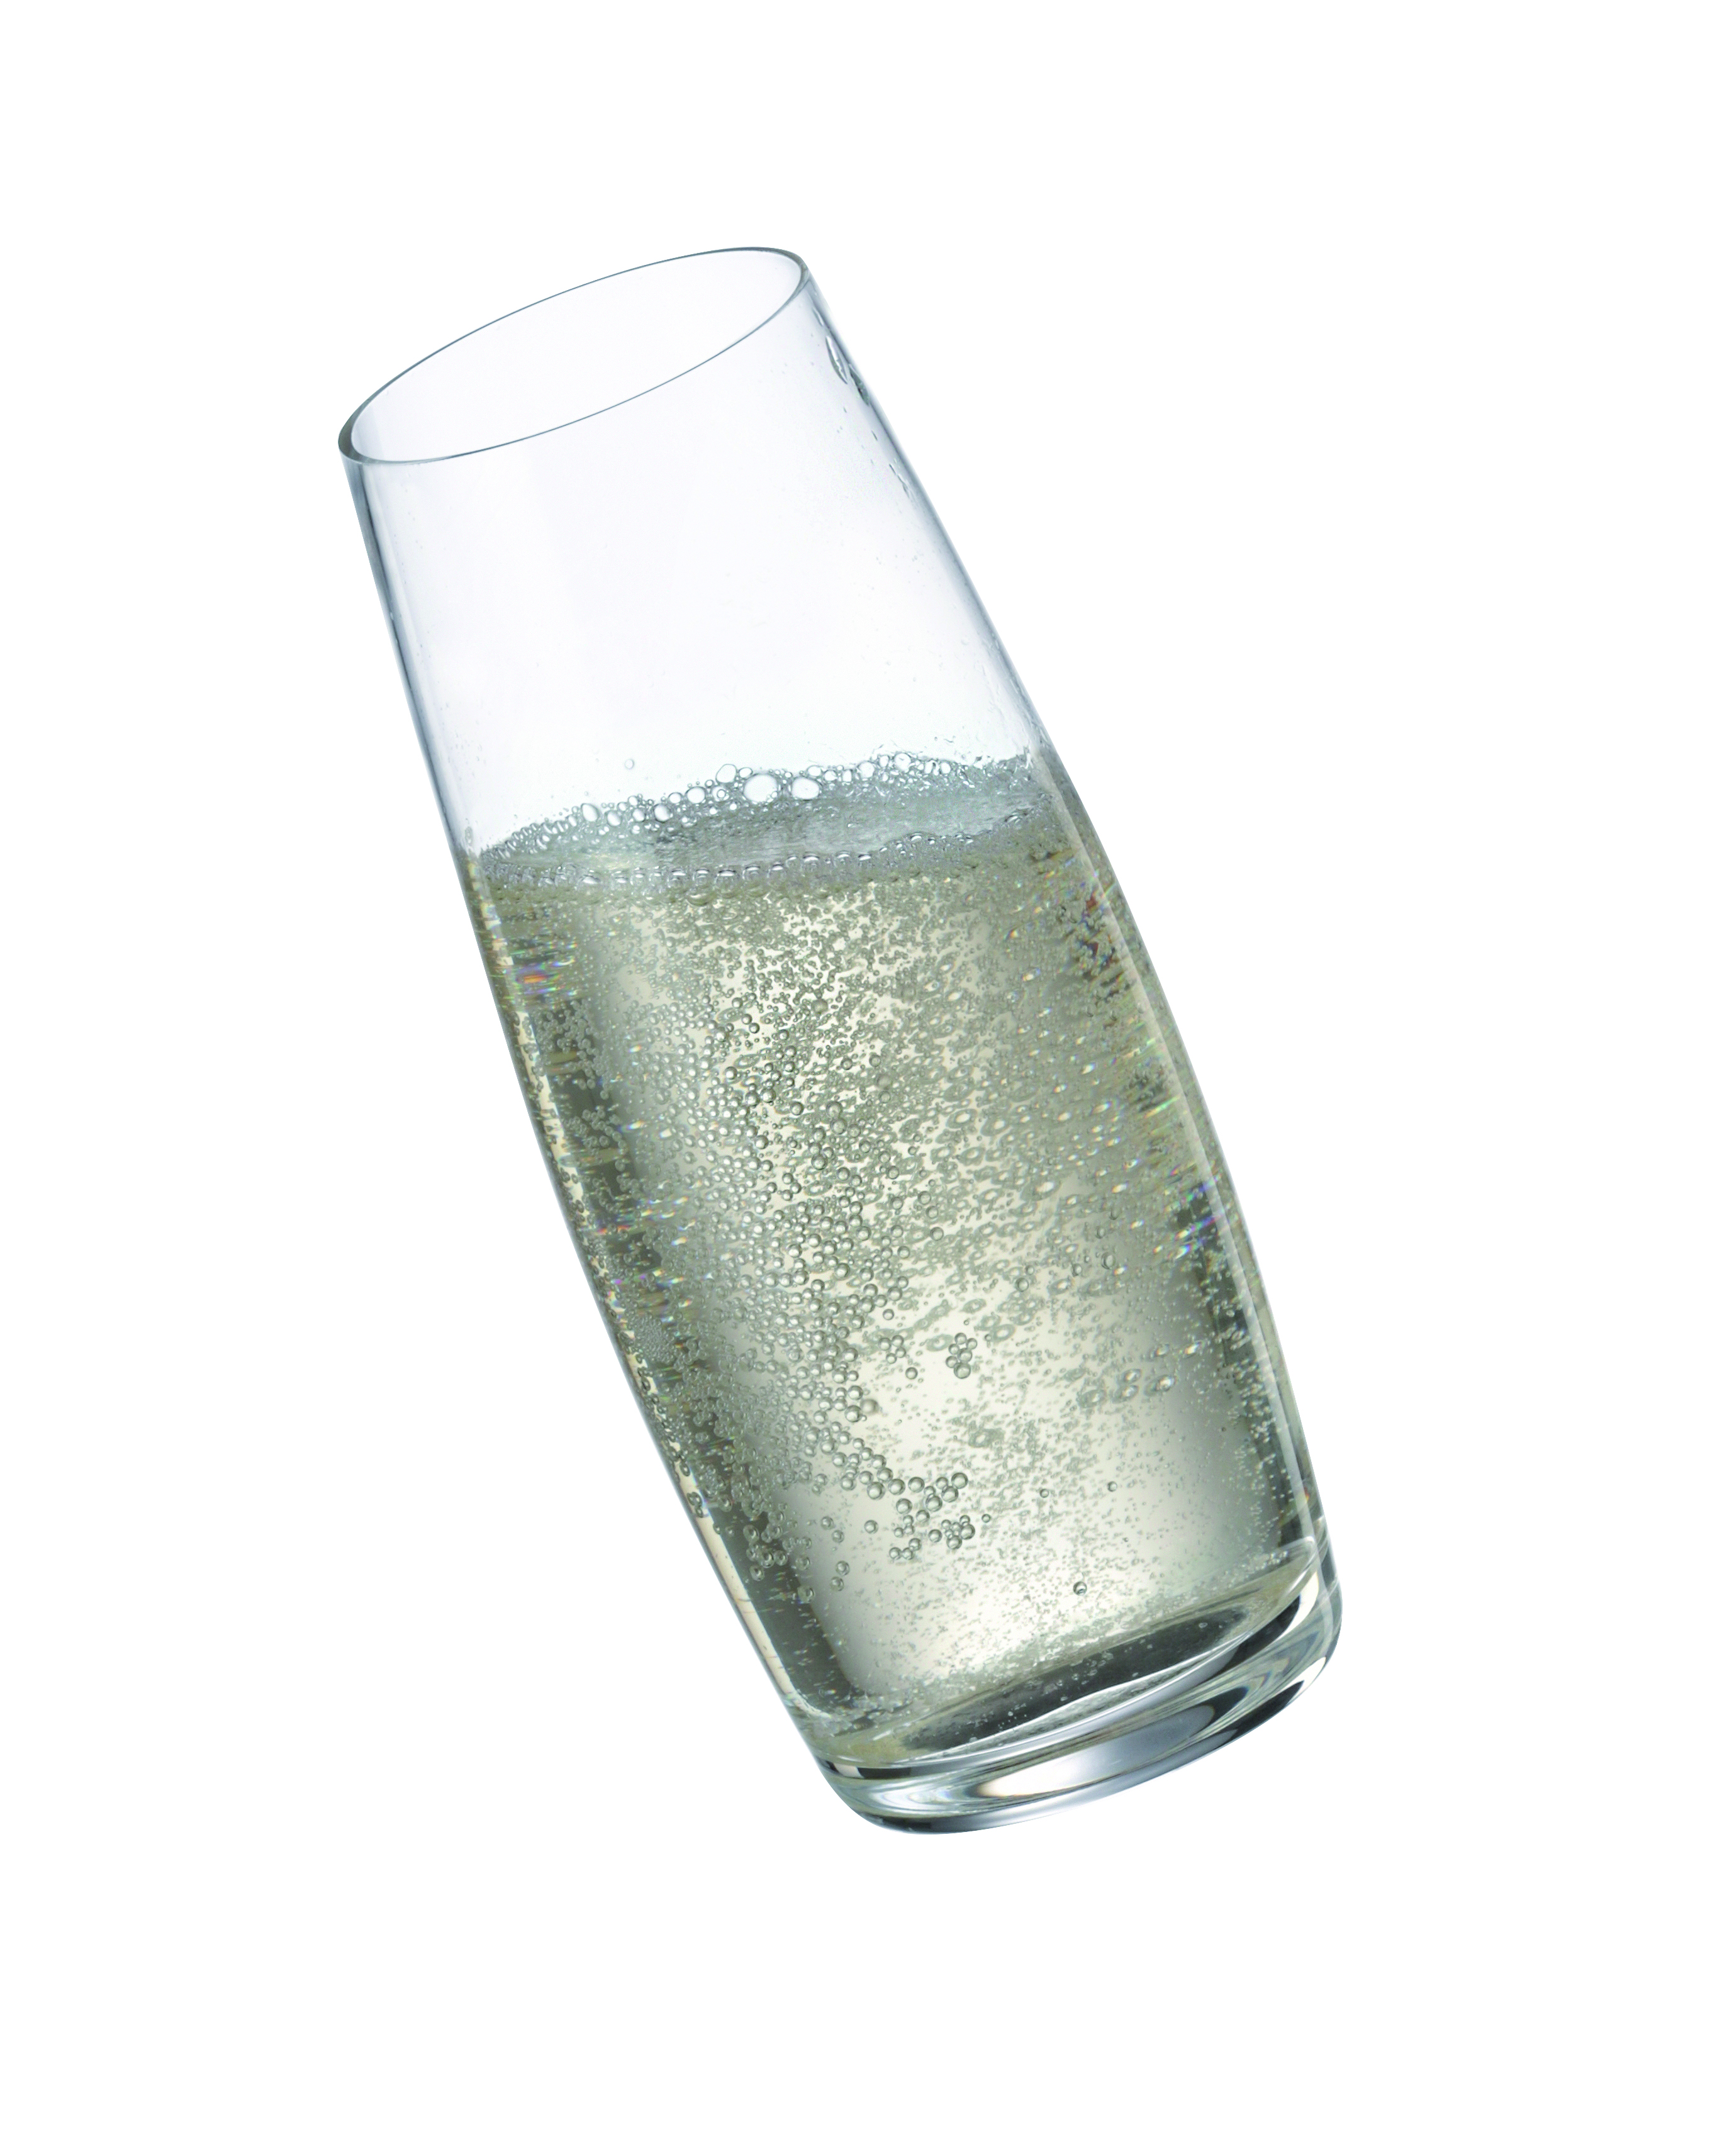 Leona Crystalline 270 Ml Stemless Champagne Glass 4 Pk